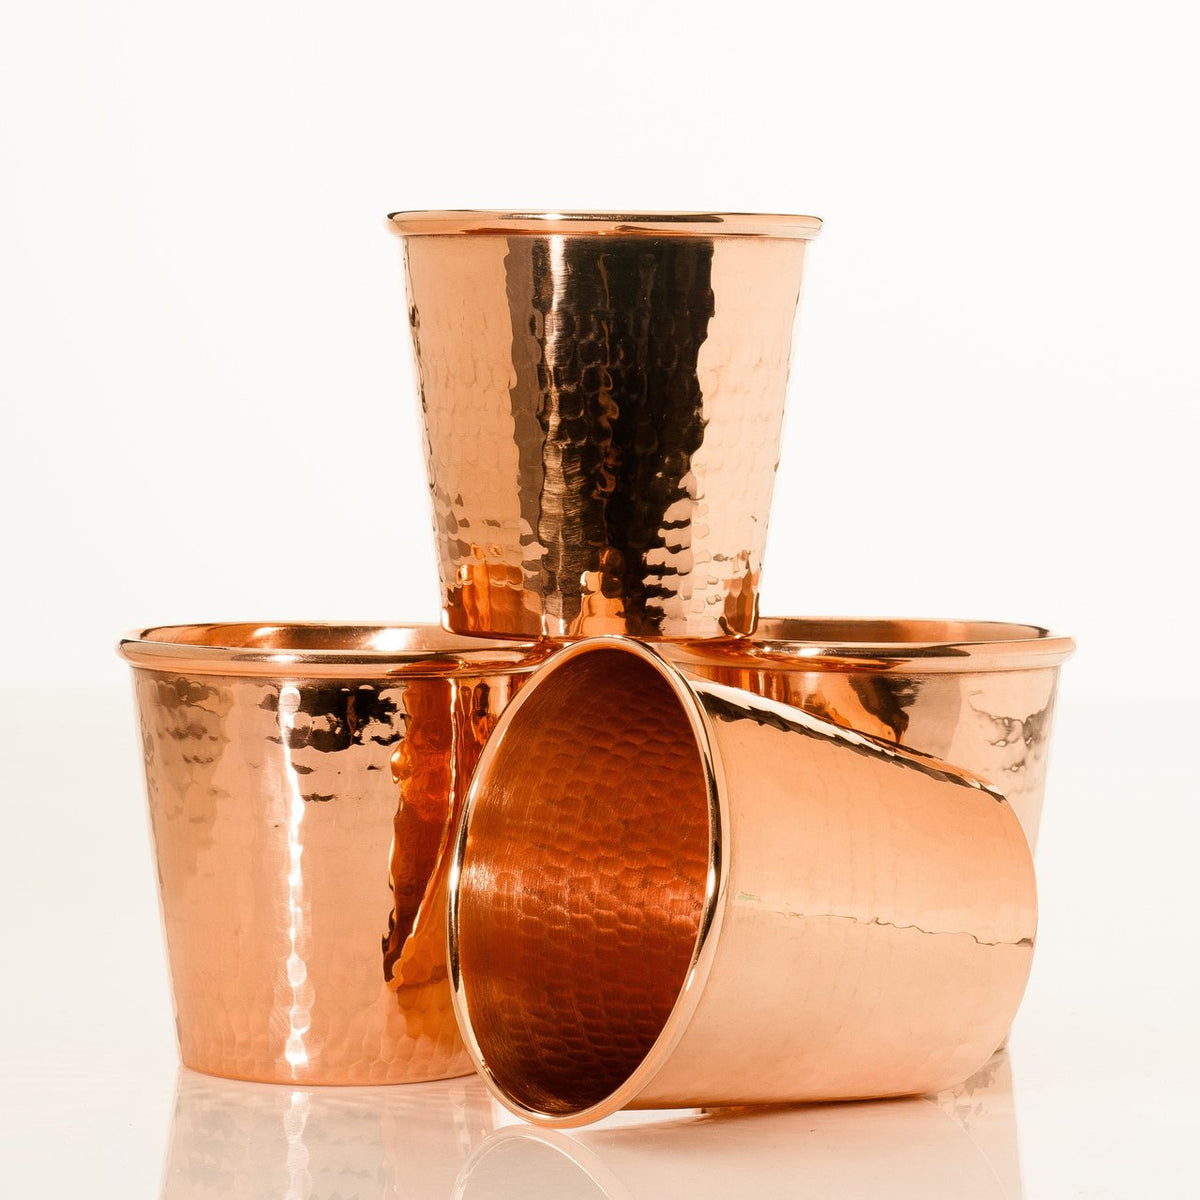 Apa Copper Cup